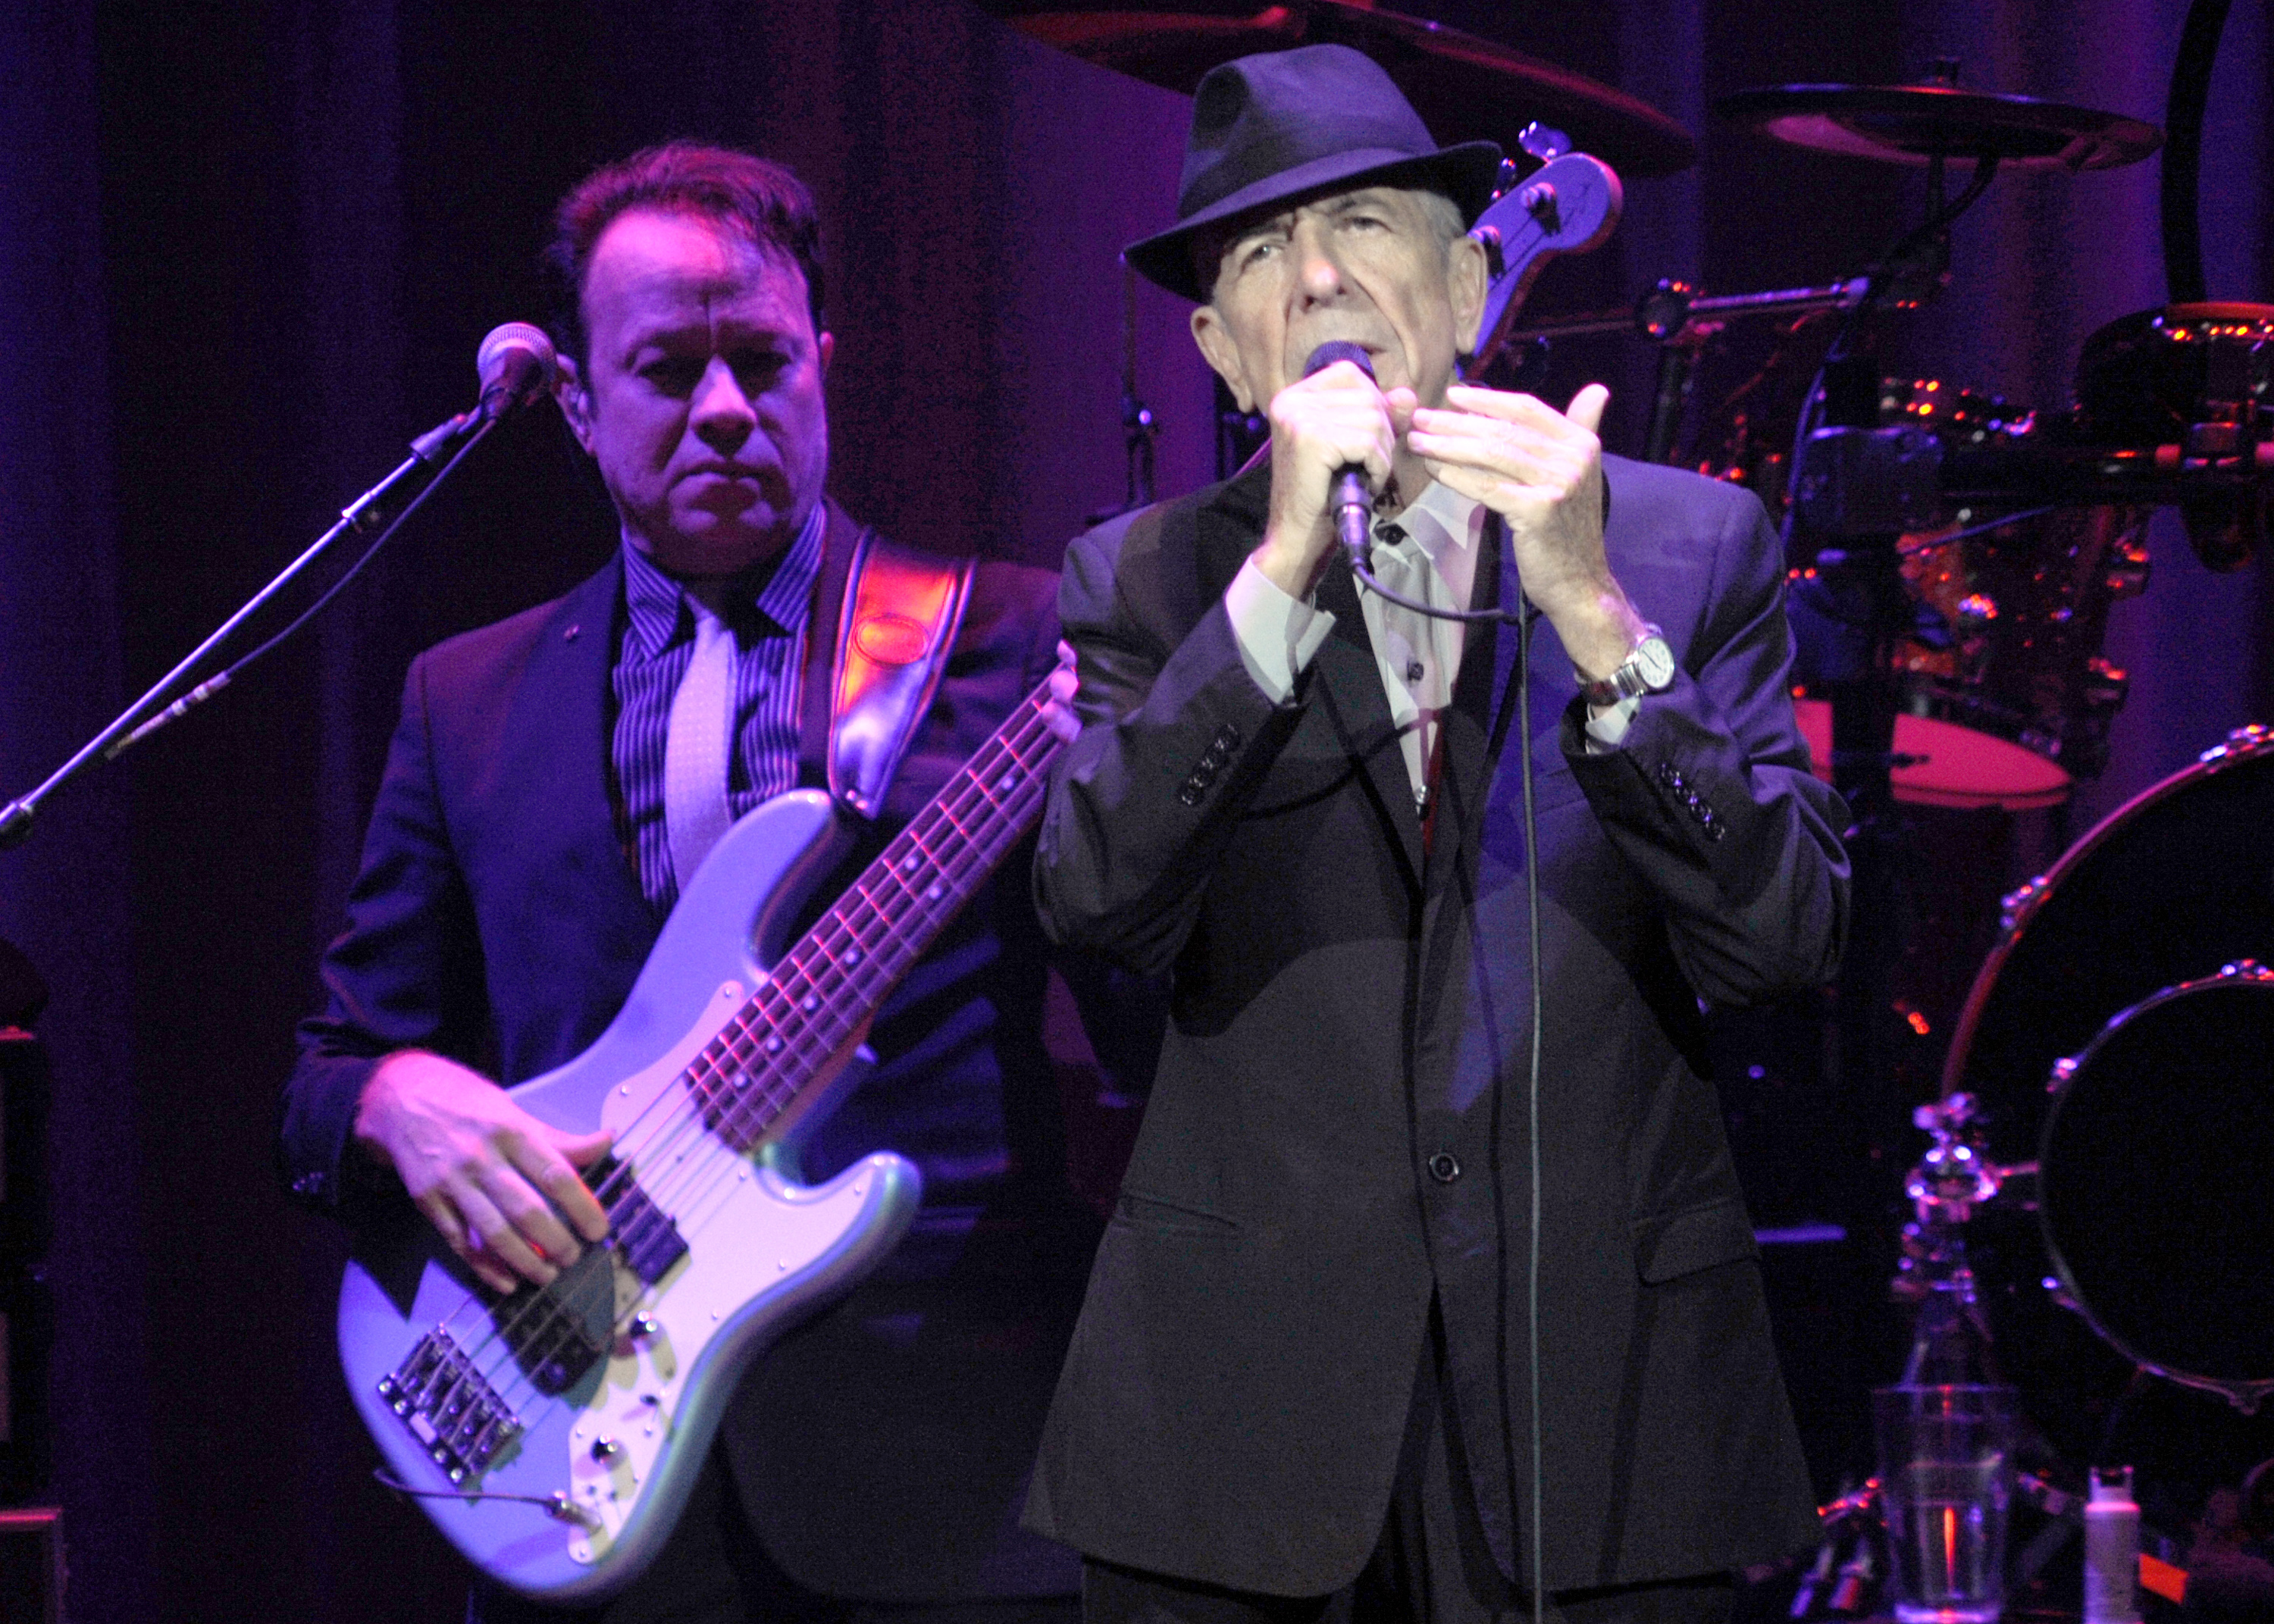 Iggy Pop, Peter Gabriel Lead New Leonard Cohen Tribute Album